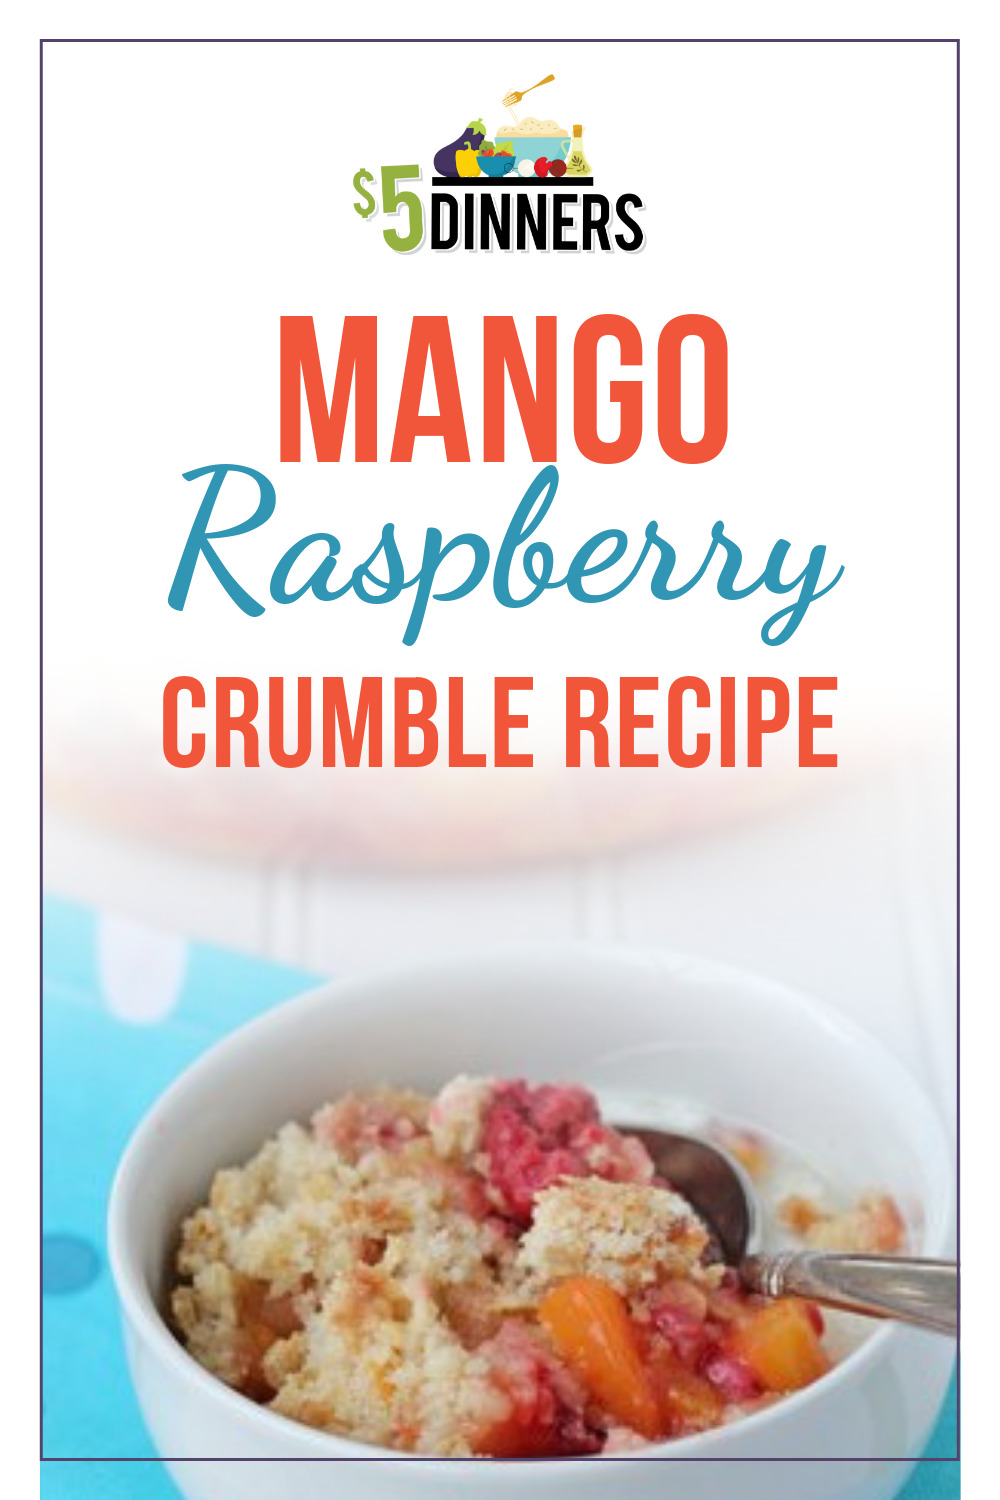 Simple, delicious recipe for the perfect summer dessert - Mango Raspberry Crumble!